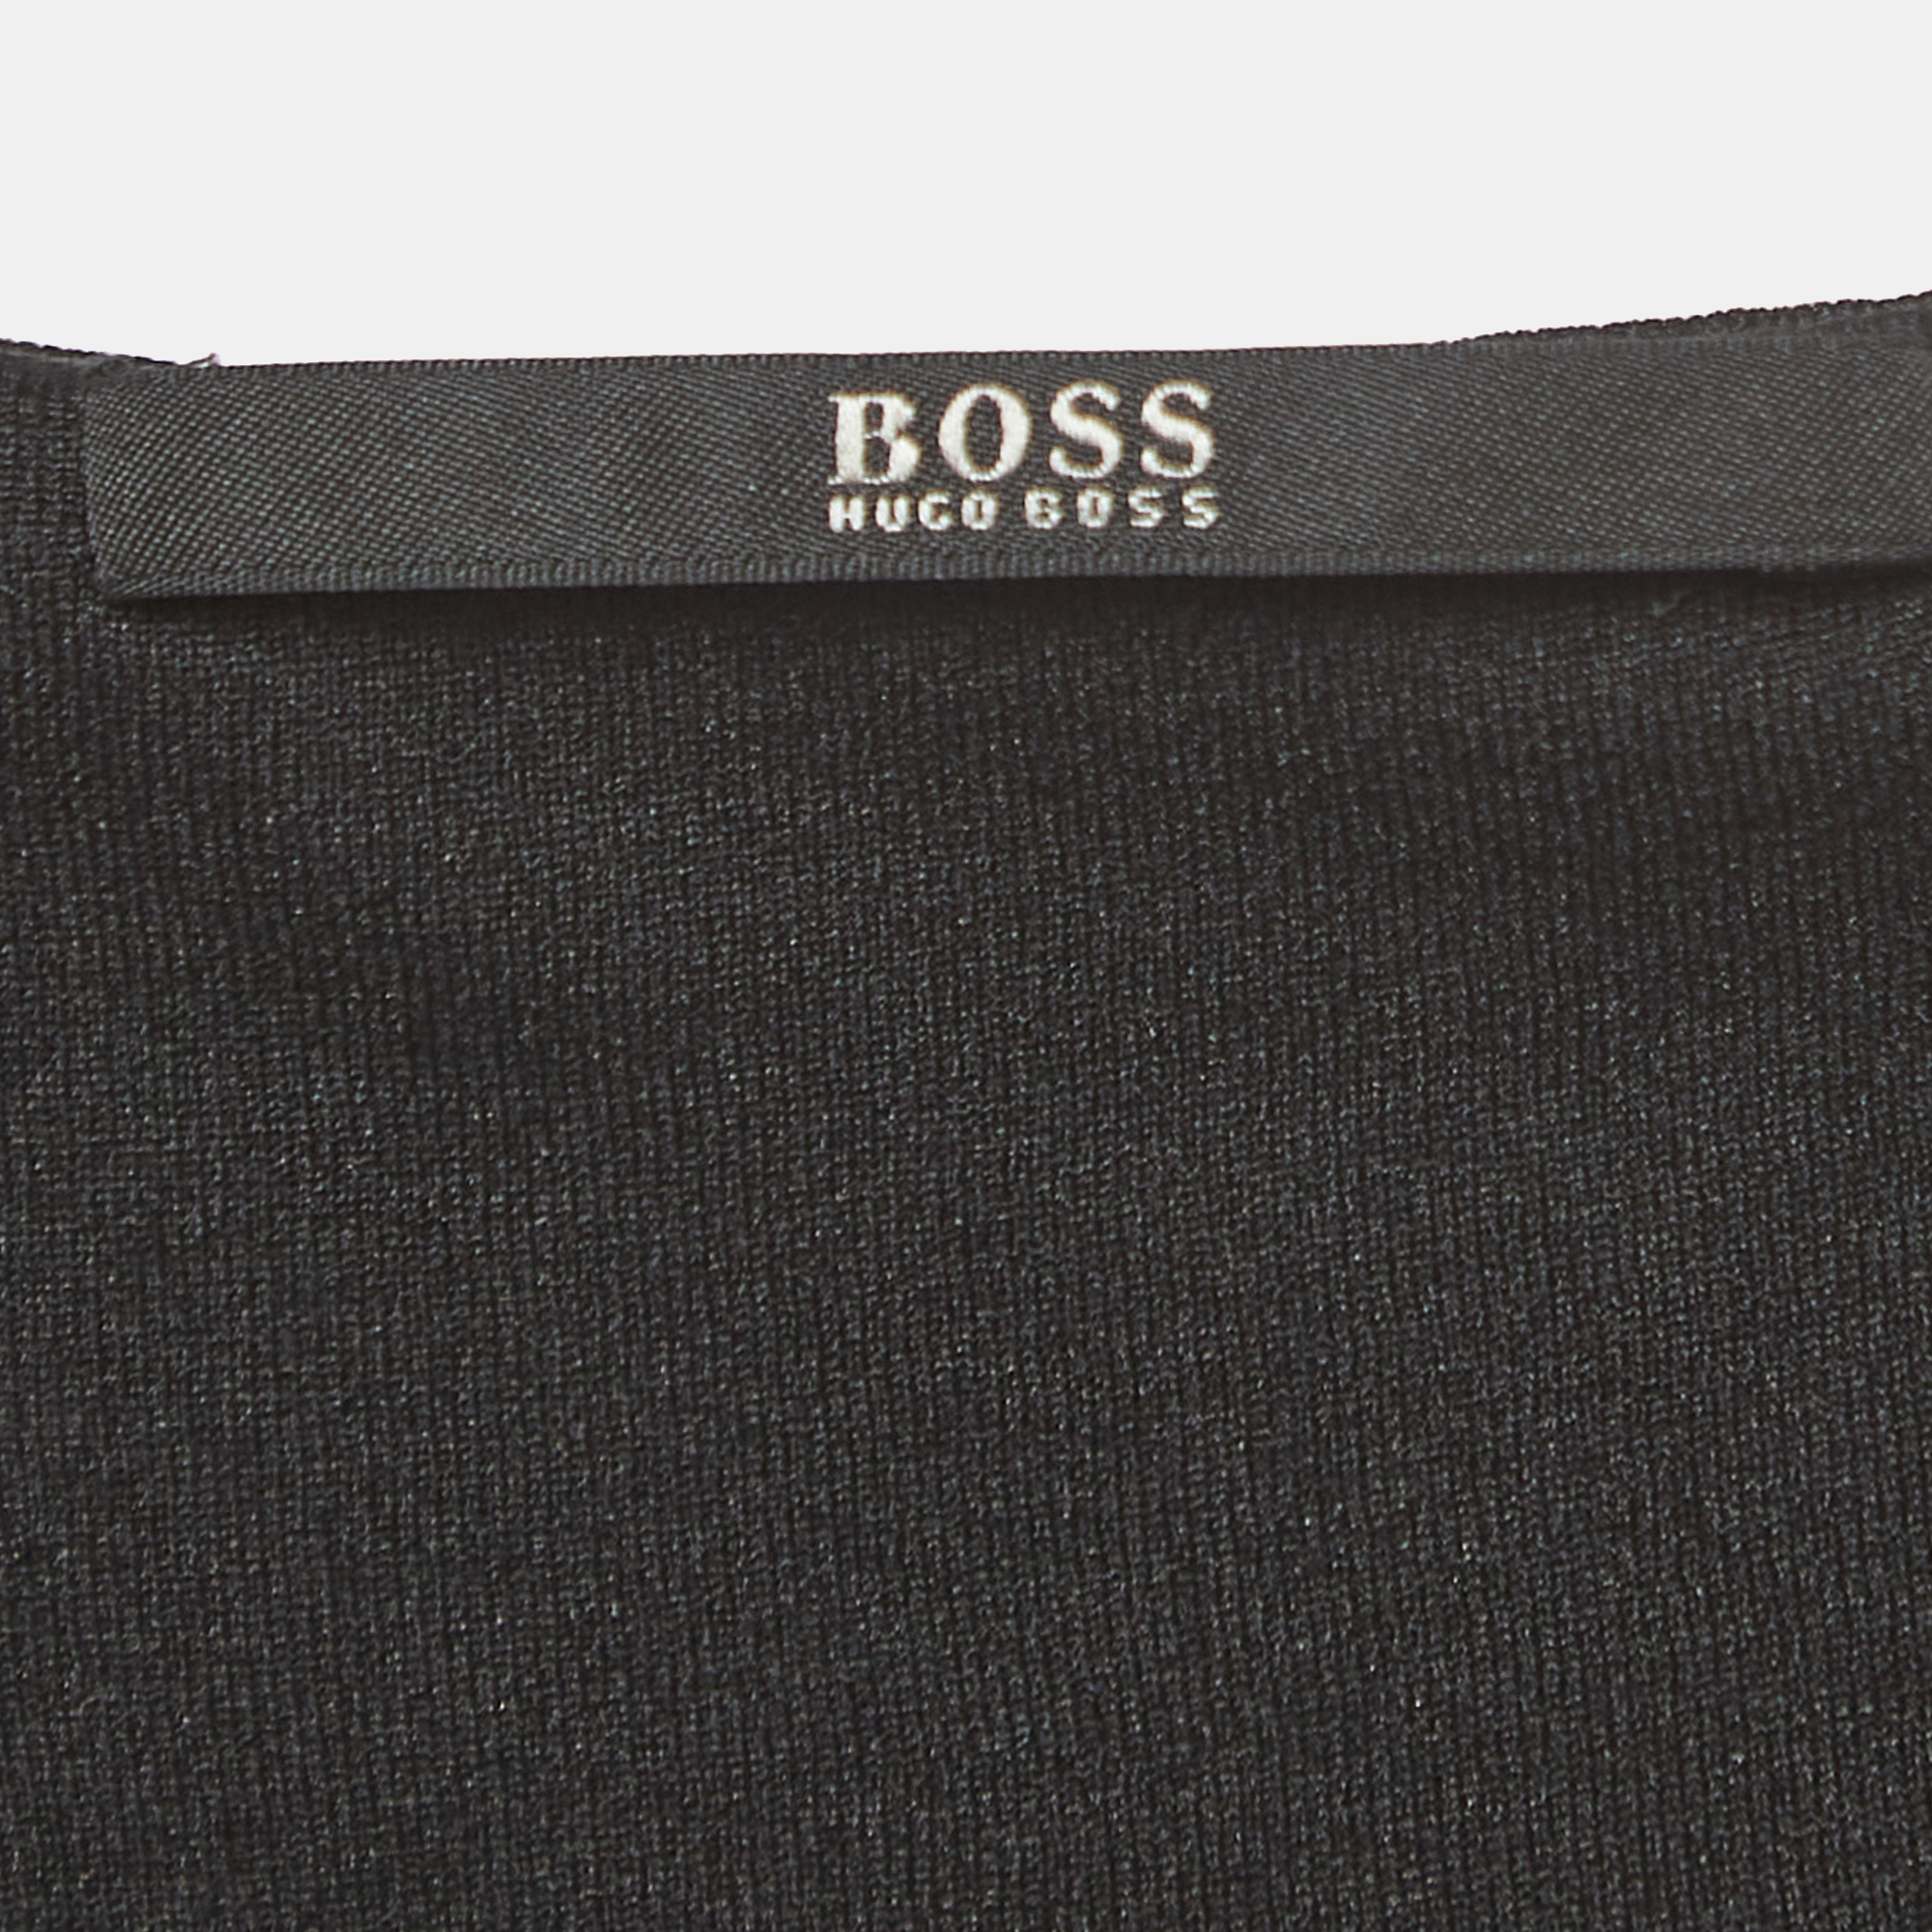 Boss By Hugo Boss Black Patterned Knit Sleeveless Short Dress S